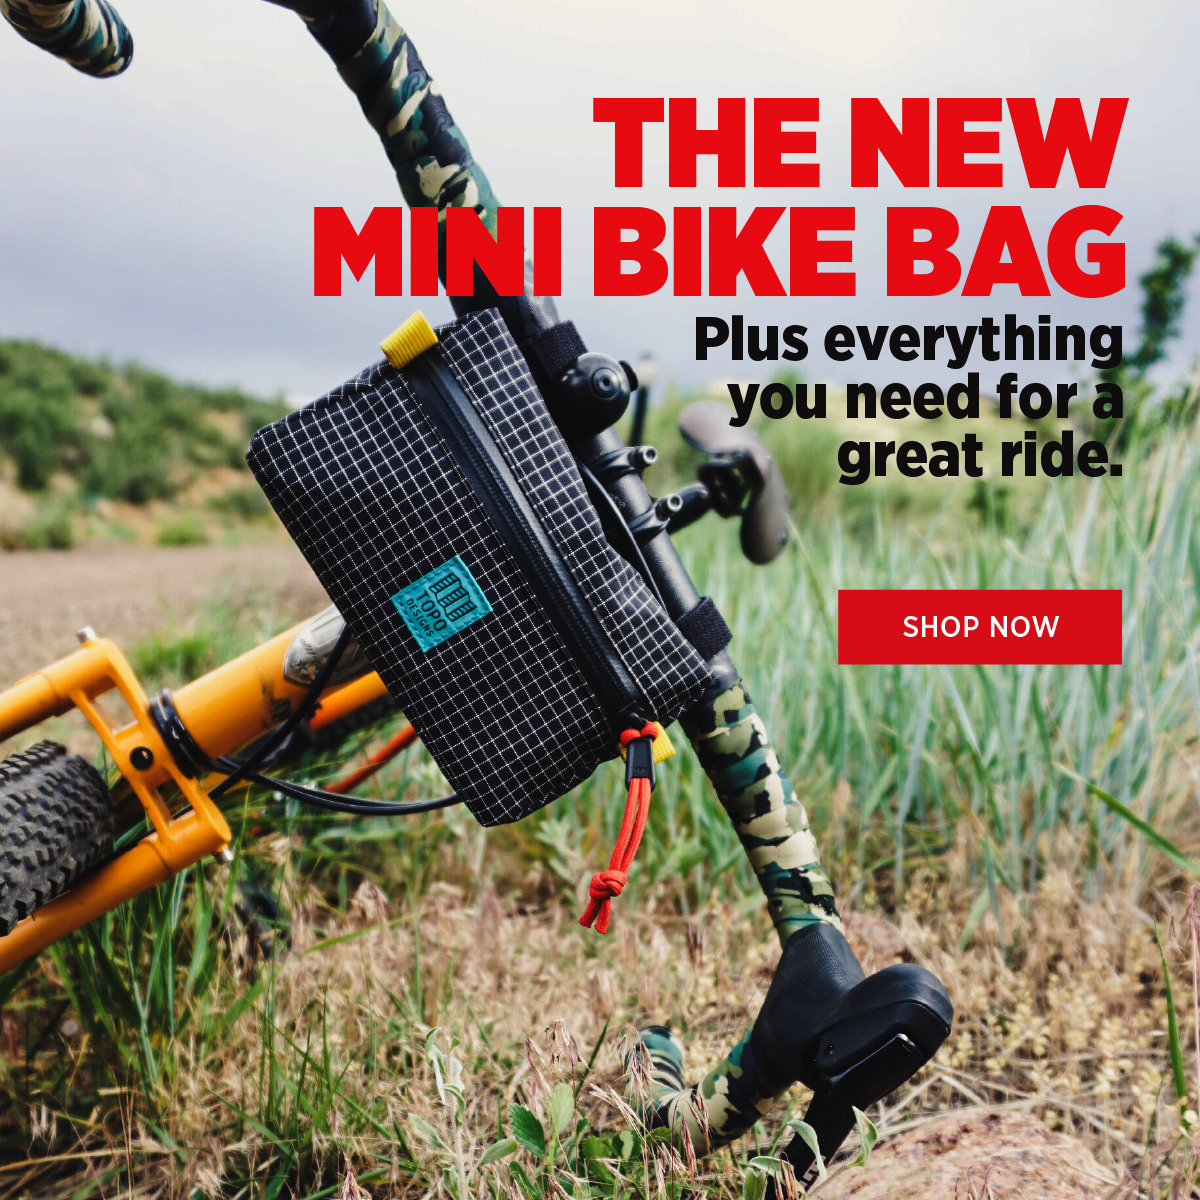 topo designs mini bike bag